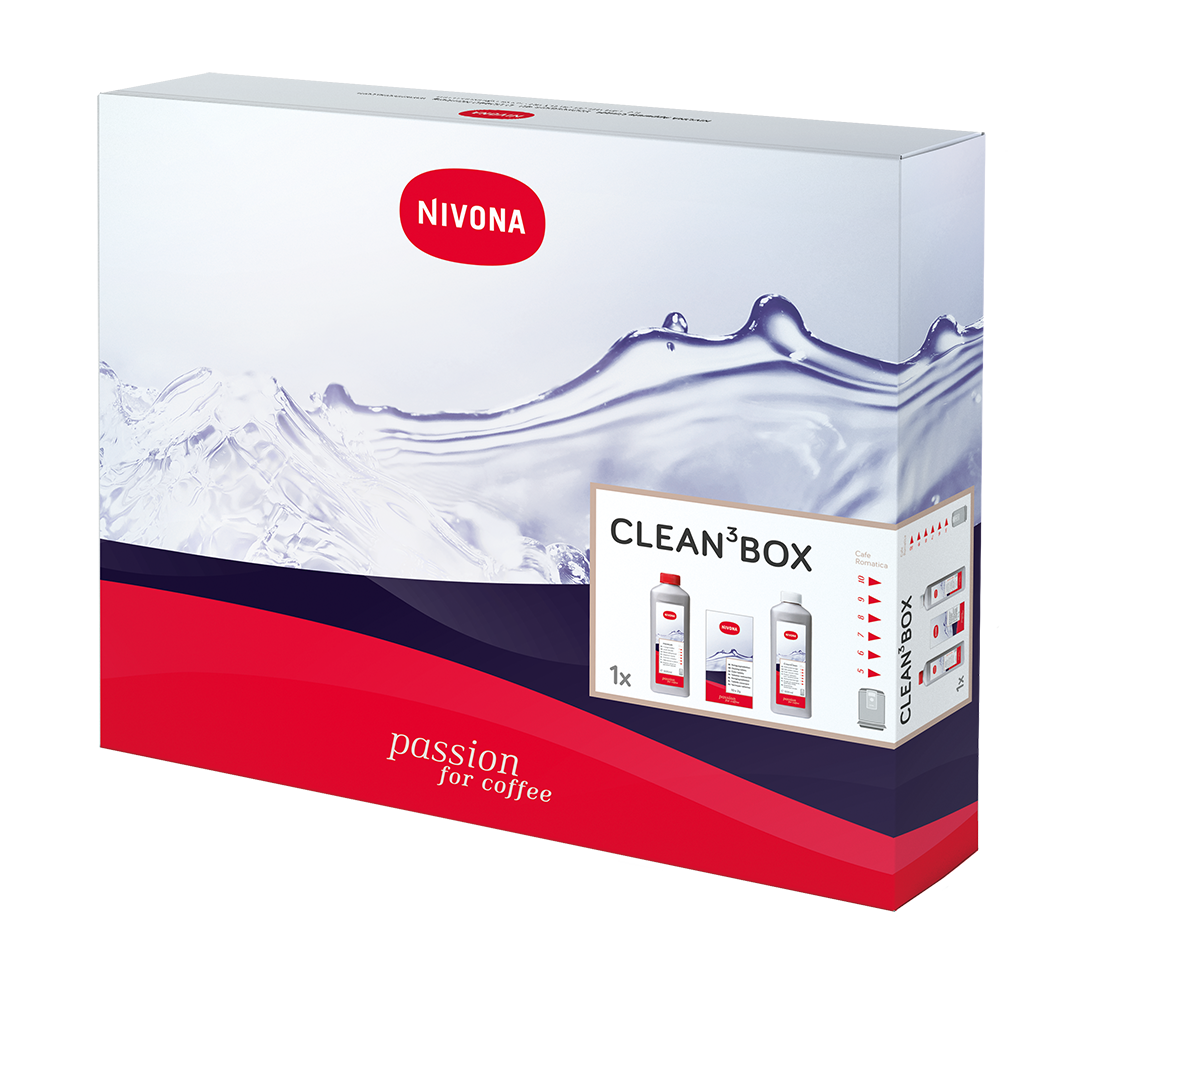 CLEAN³BOX NICB 300-Sparsets-Nivona-Beutelschmidt